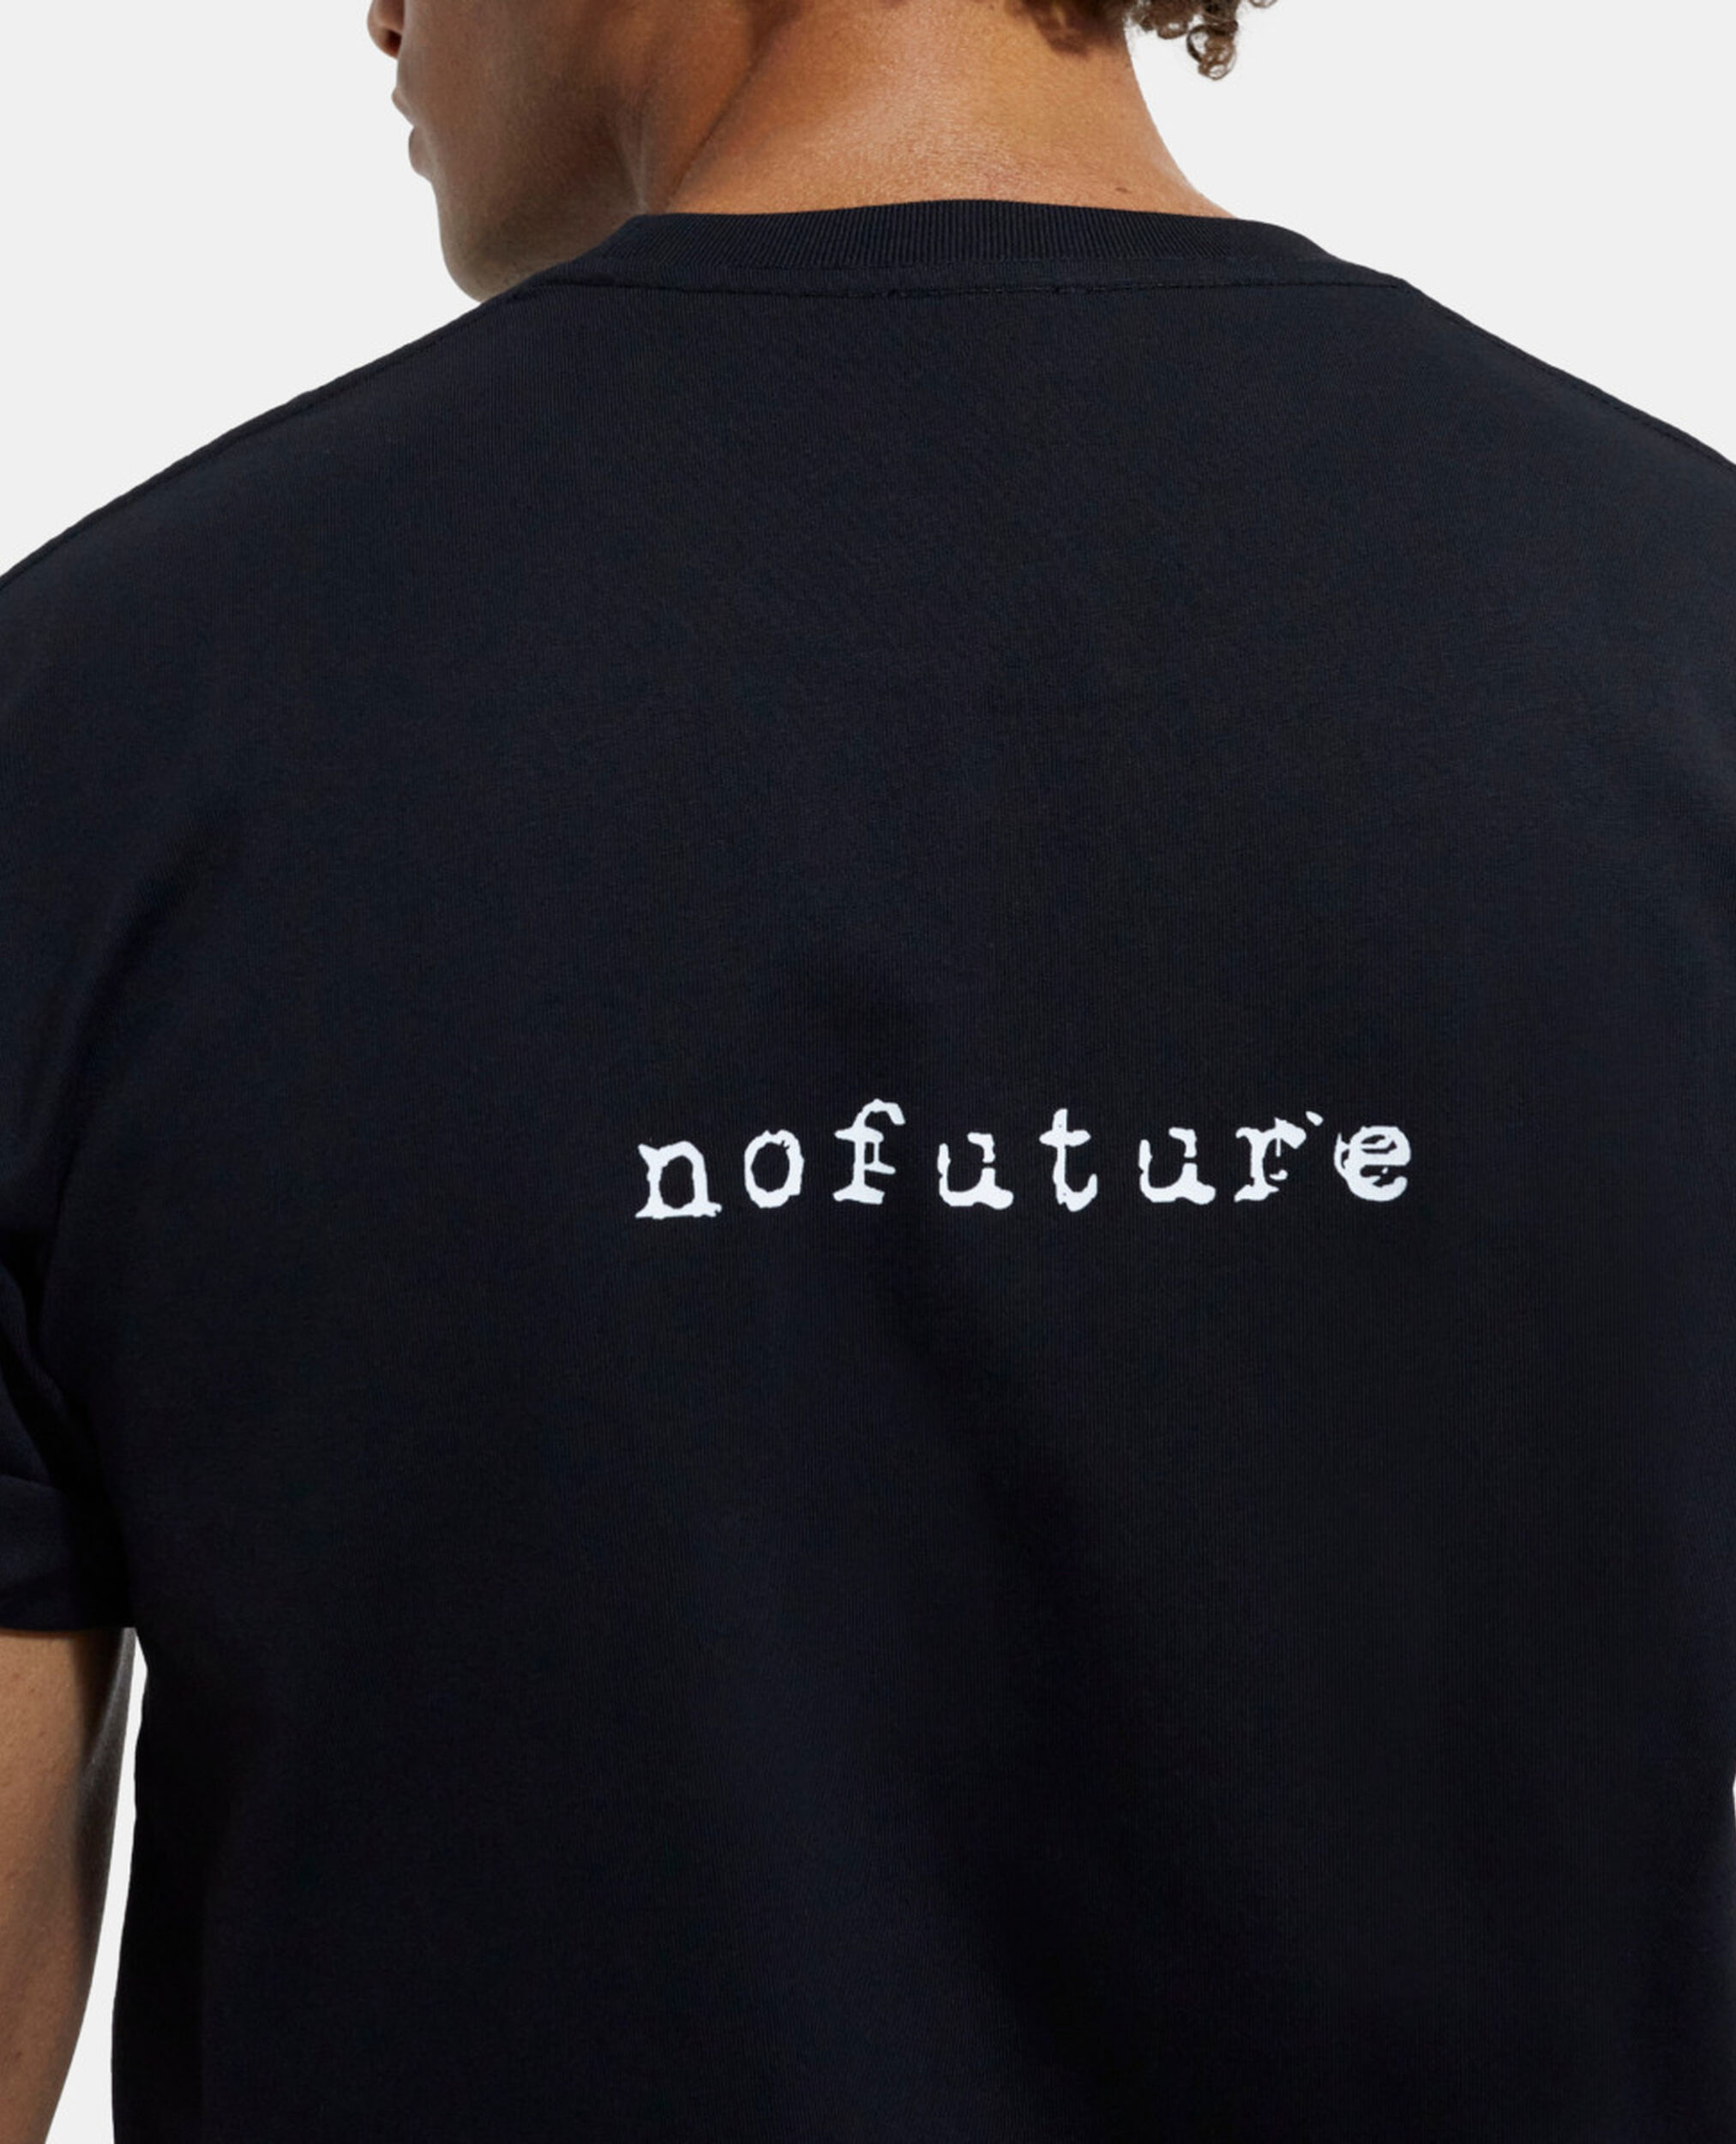 Schwarzes T-Shirt mit Logo #nokooplesnofuture, BLACK, hi-res image number null